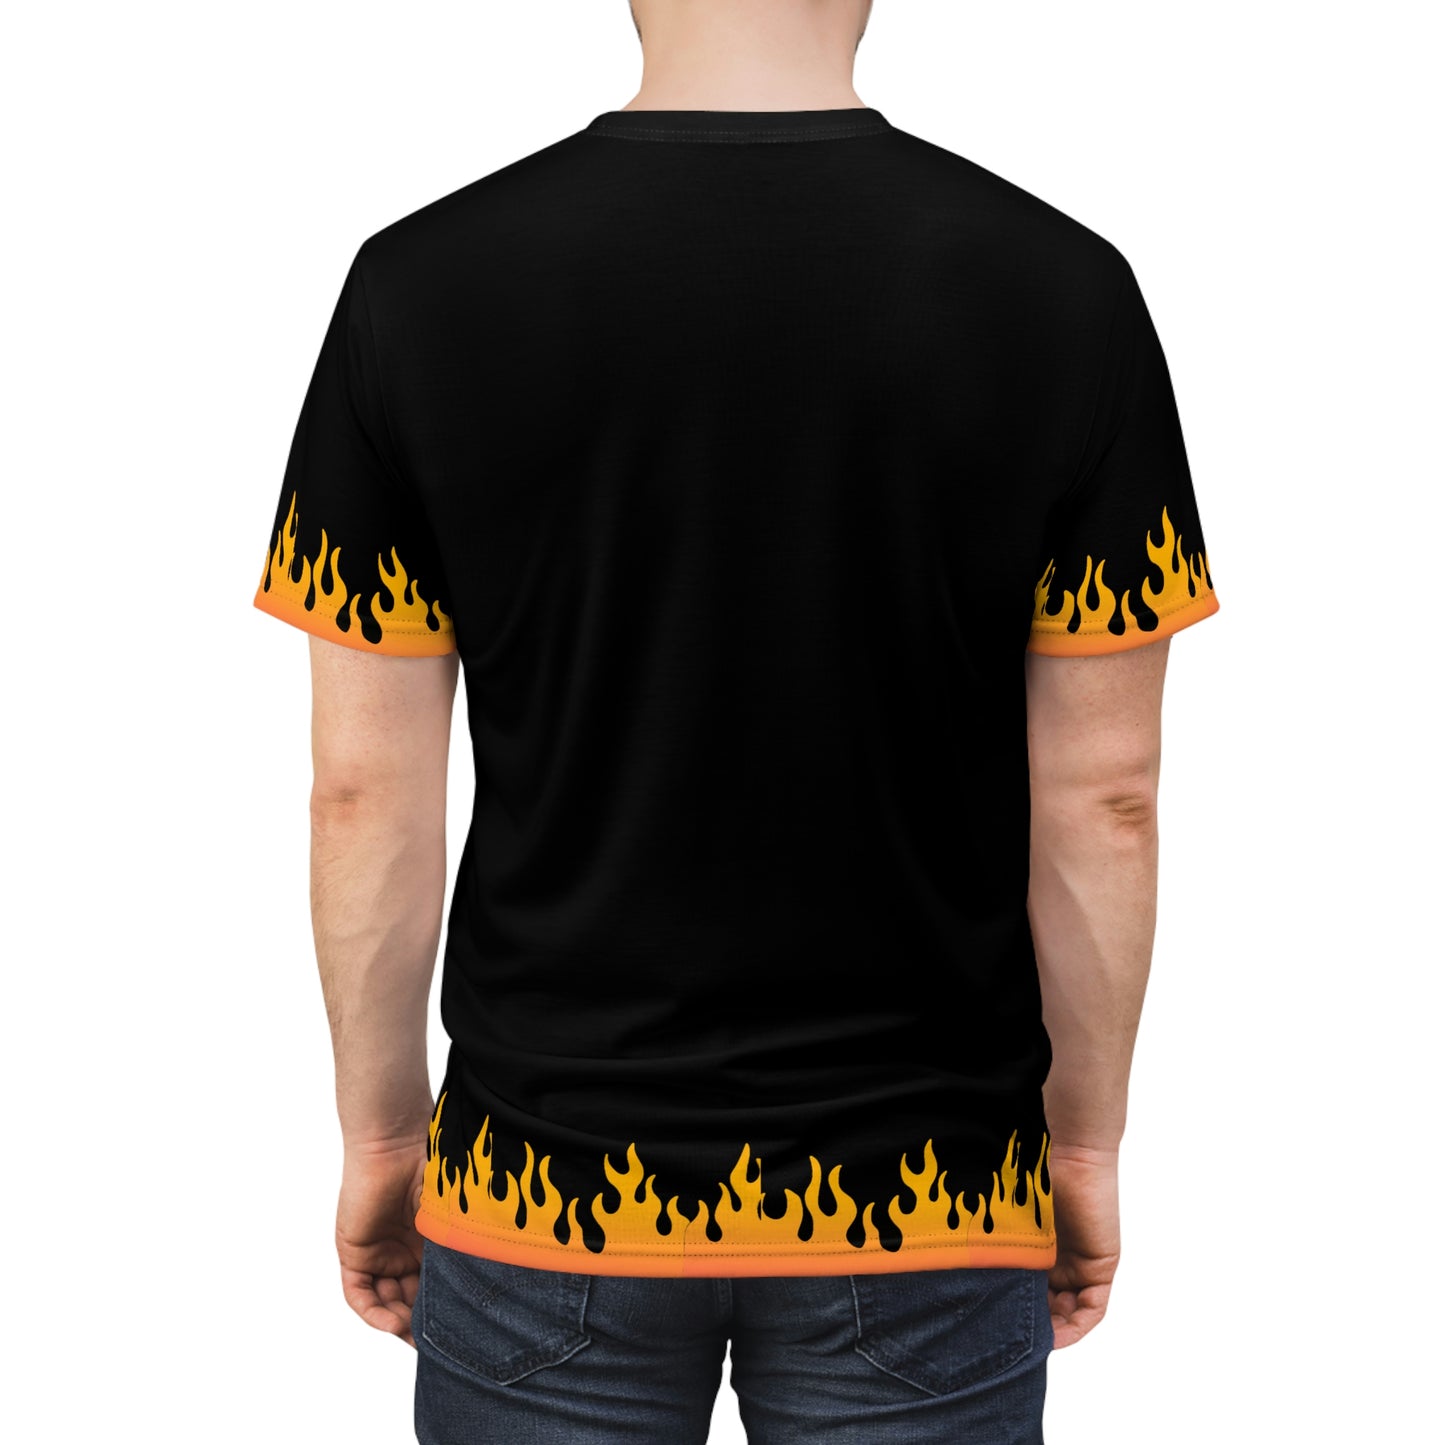 Primitive upnight T-shirt in flames - Official primitive store